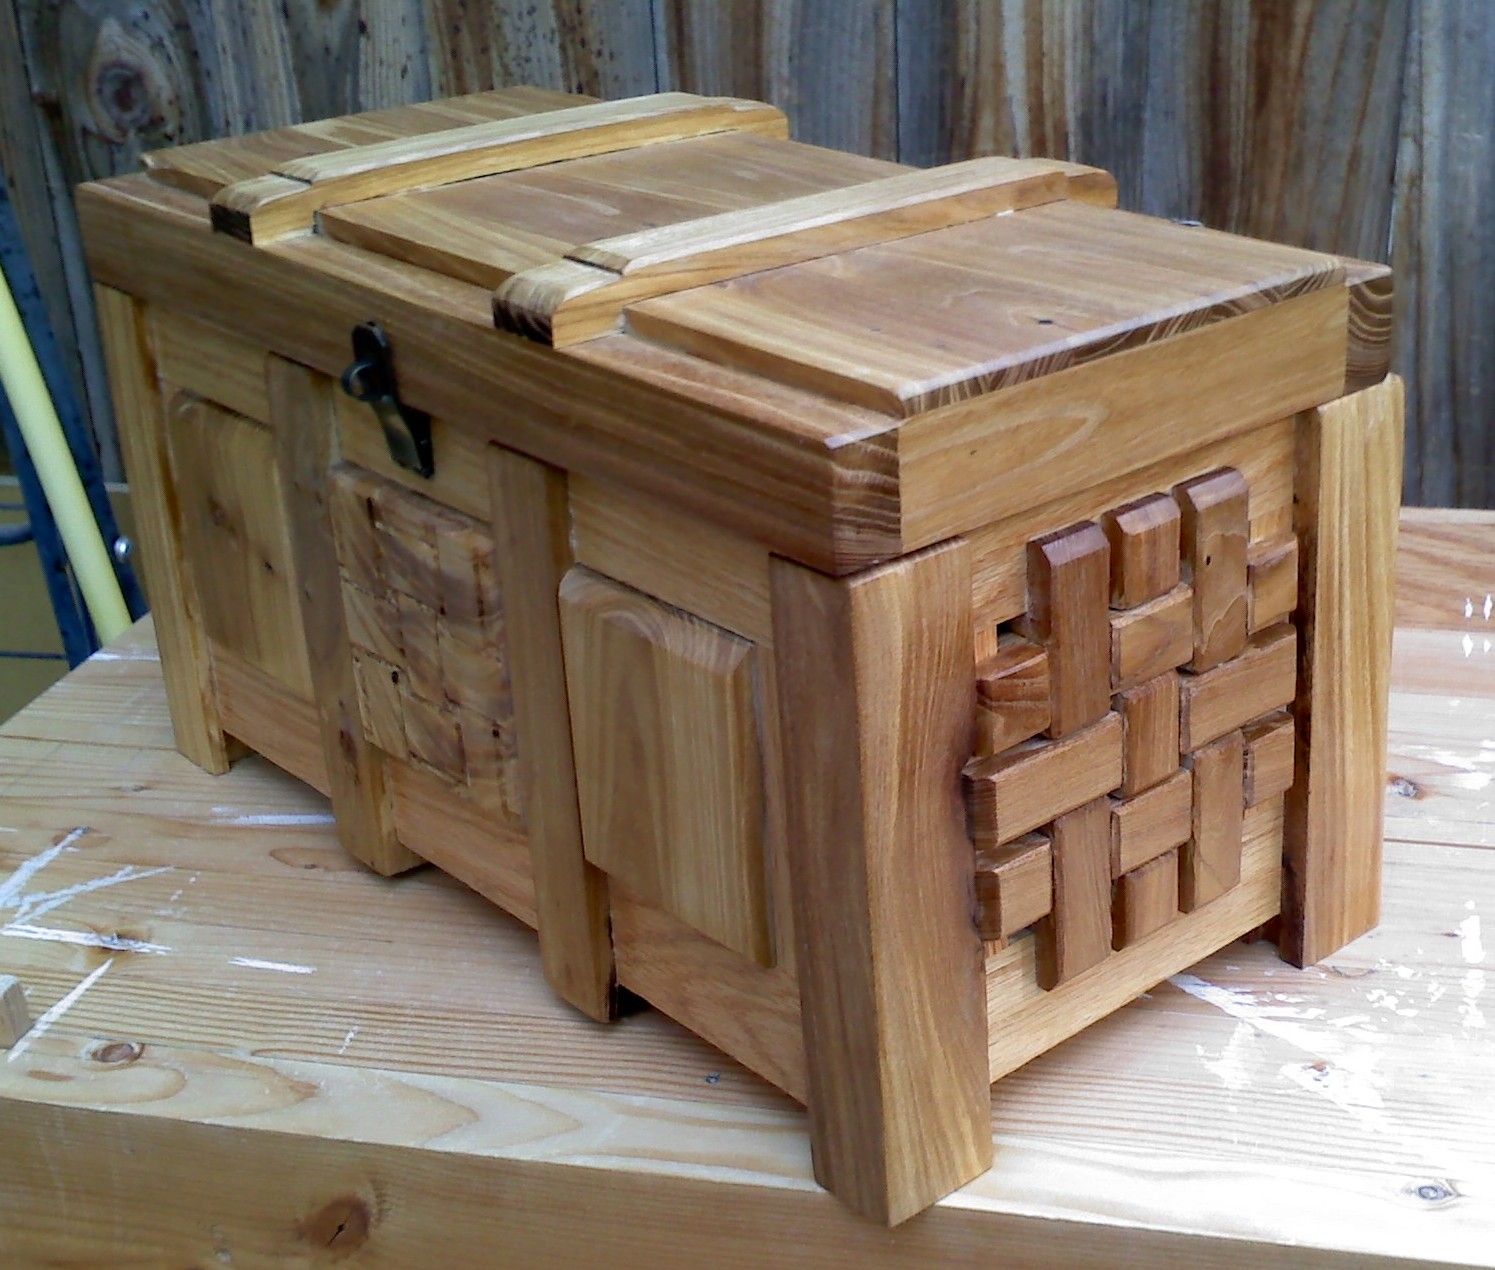  custom made wood boxes